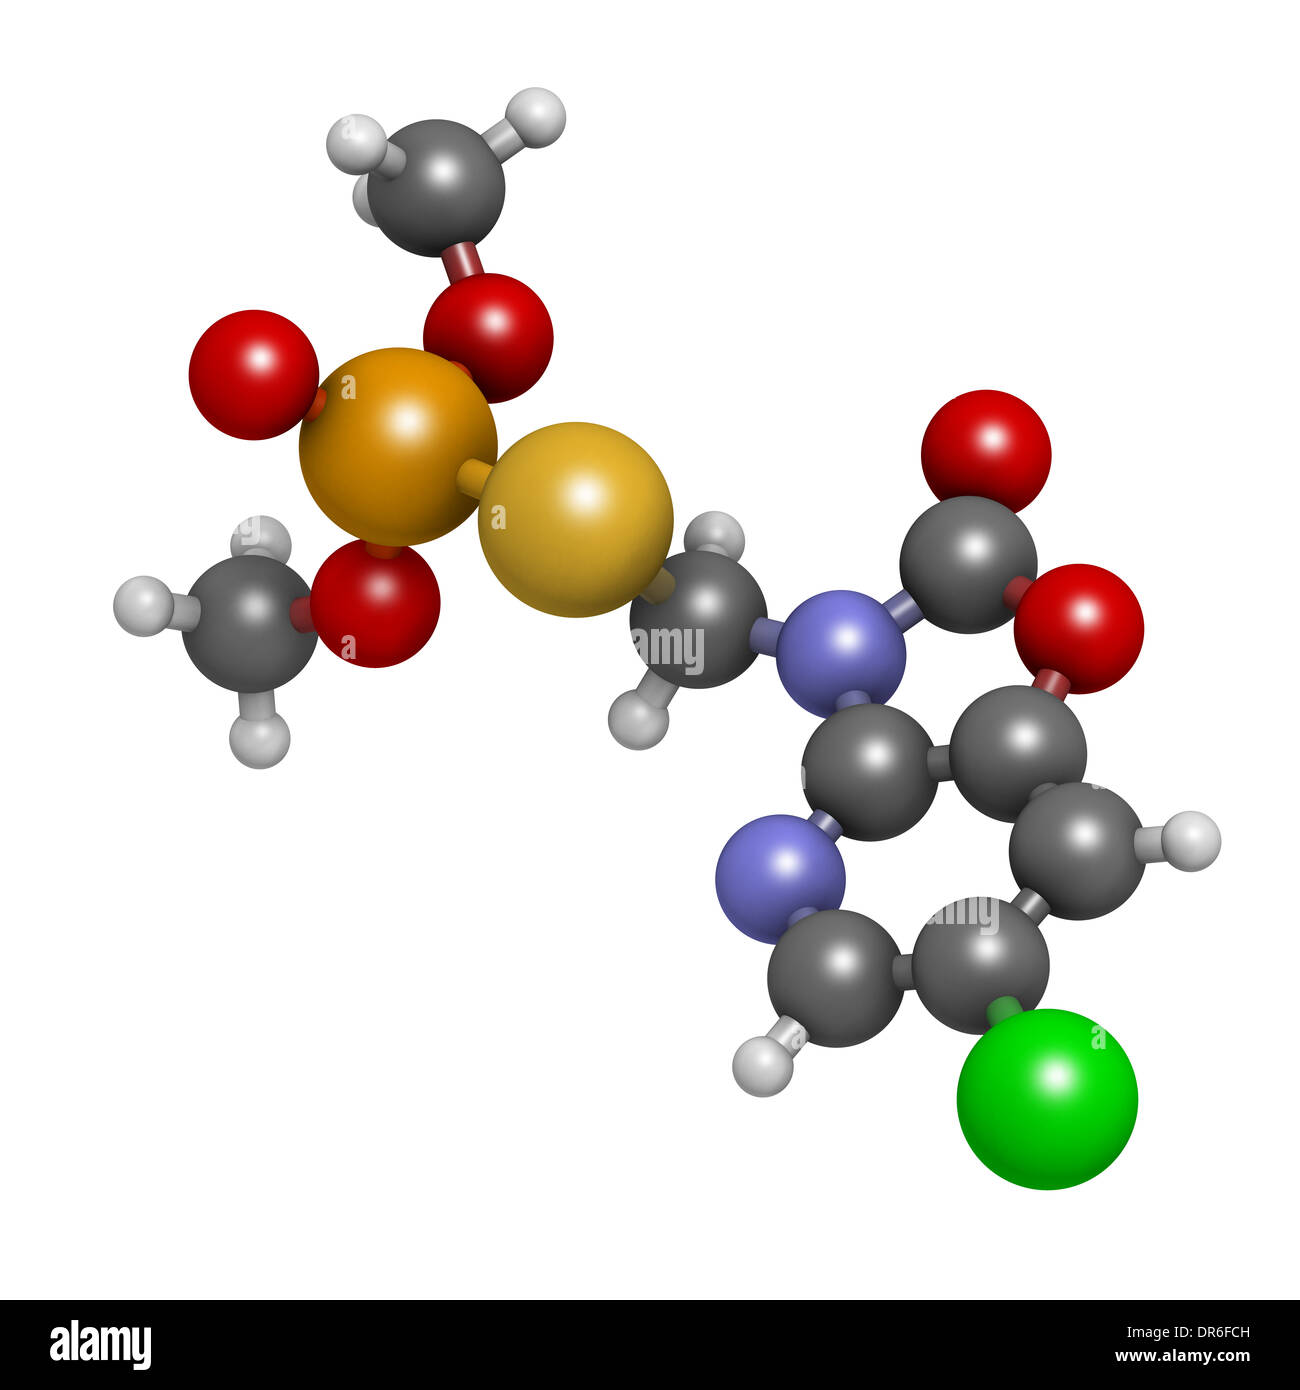 Azamethiphos pesticide molecule. Used in flypaper, veterinary medicine, etc. Stock Photo